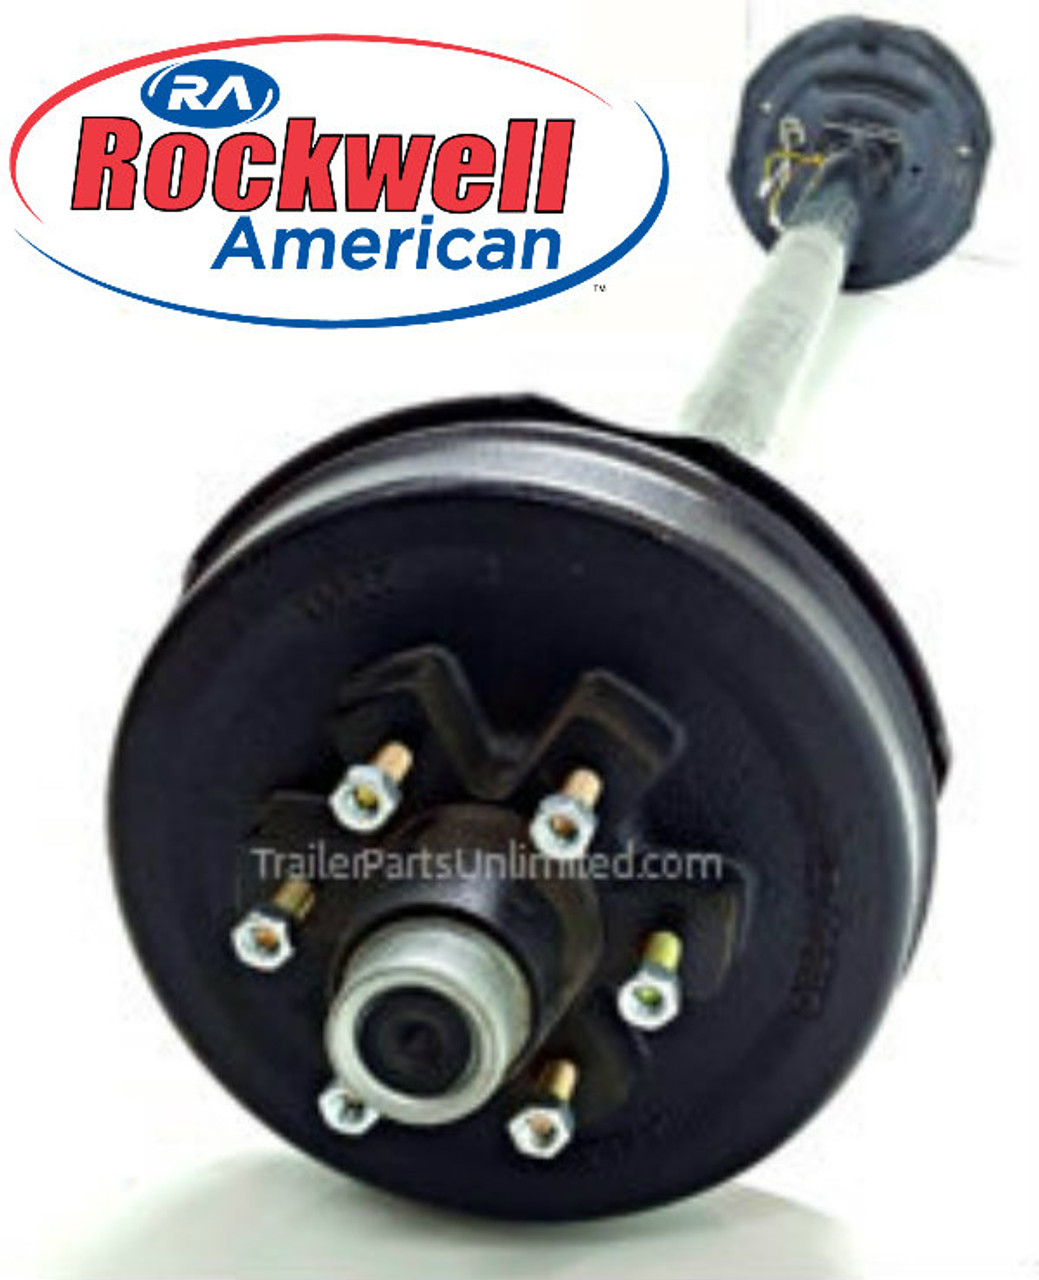 5.2k Rockwell Electric Brake Cambered Axle 6 Lug EZ Grease